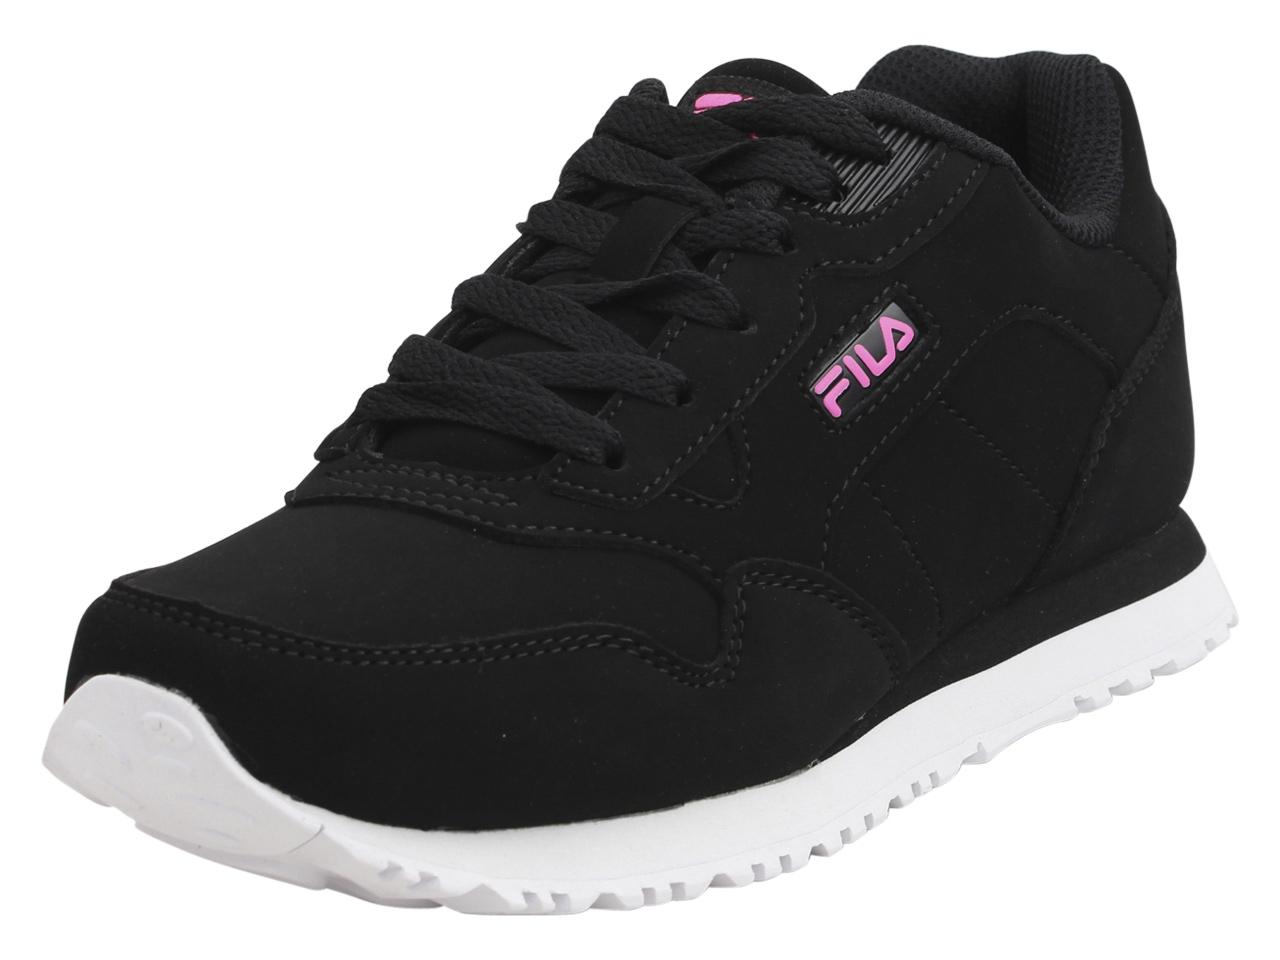 Fila Women's Cress Sneakers Shoes - Black/Knock Out Pink/White - 8 B(M) US